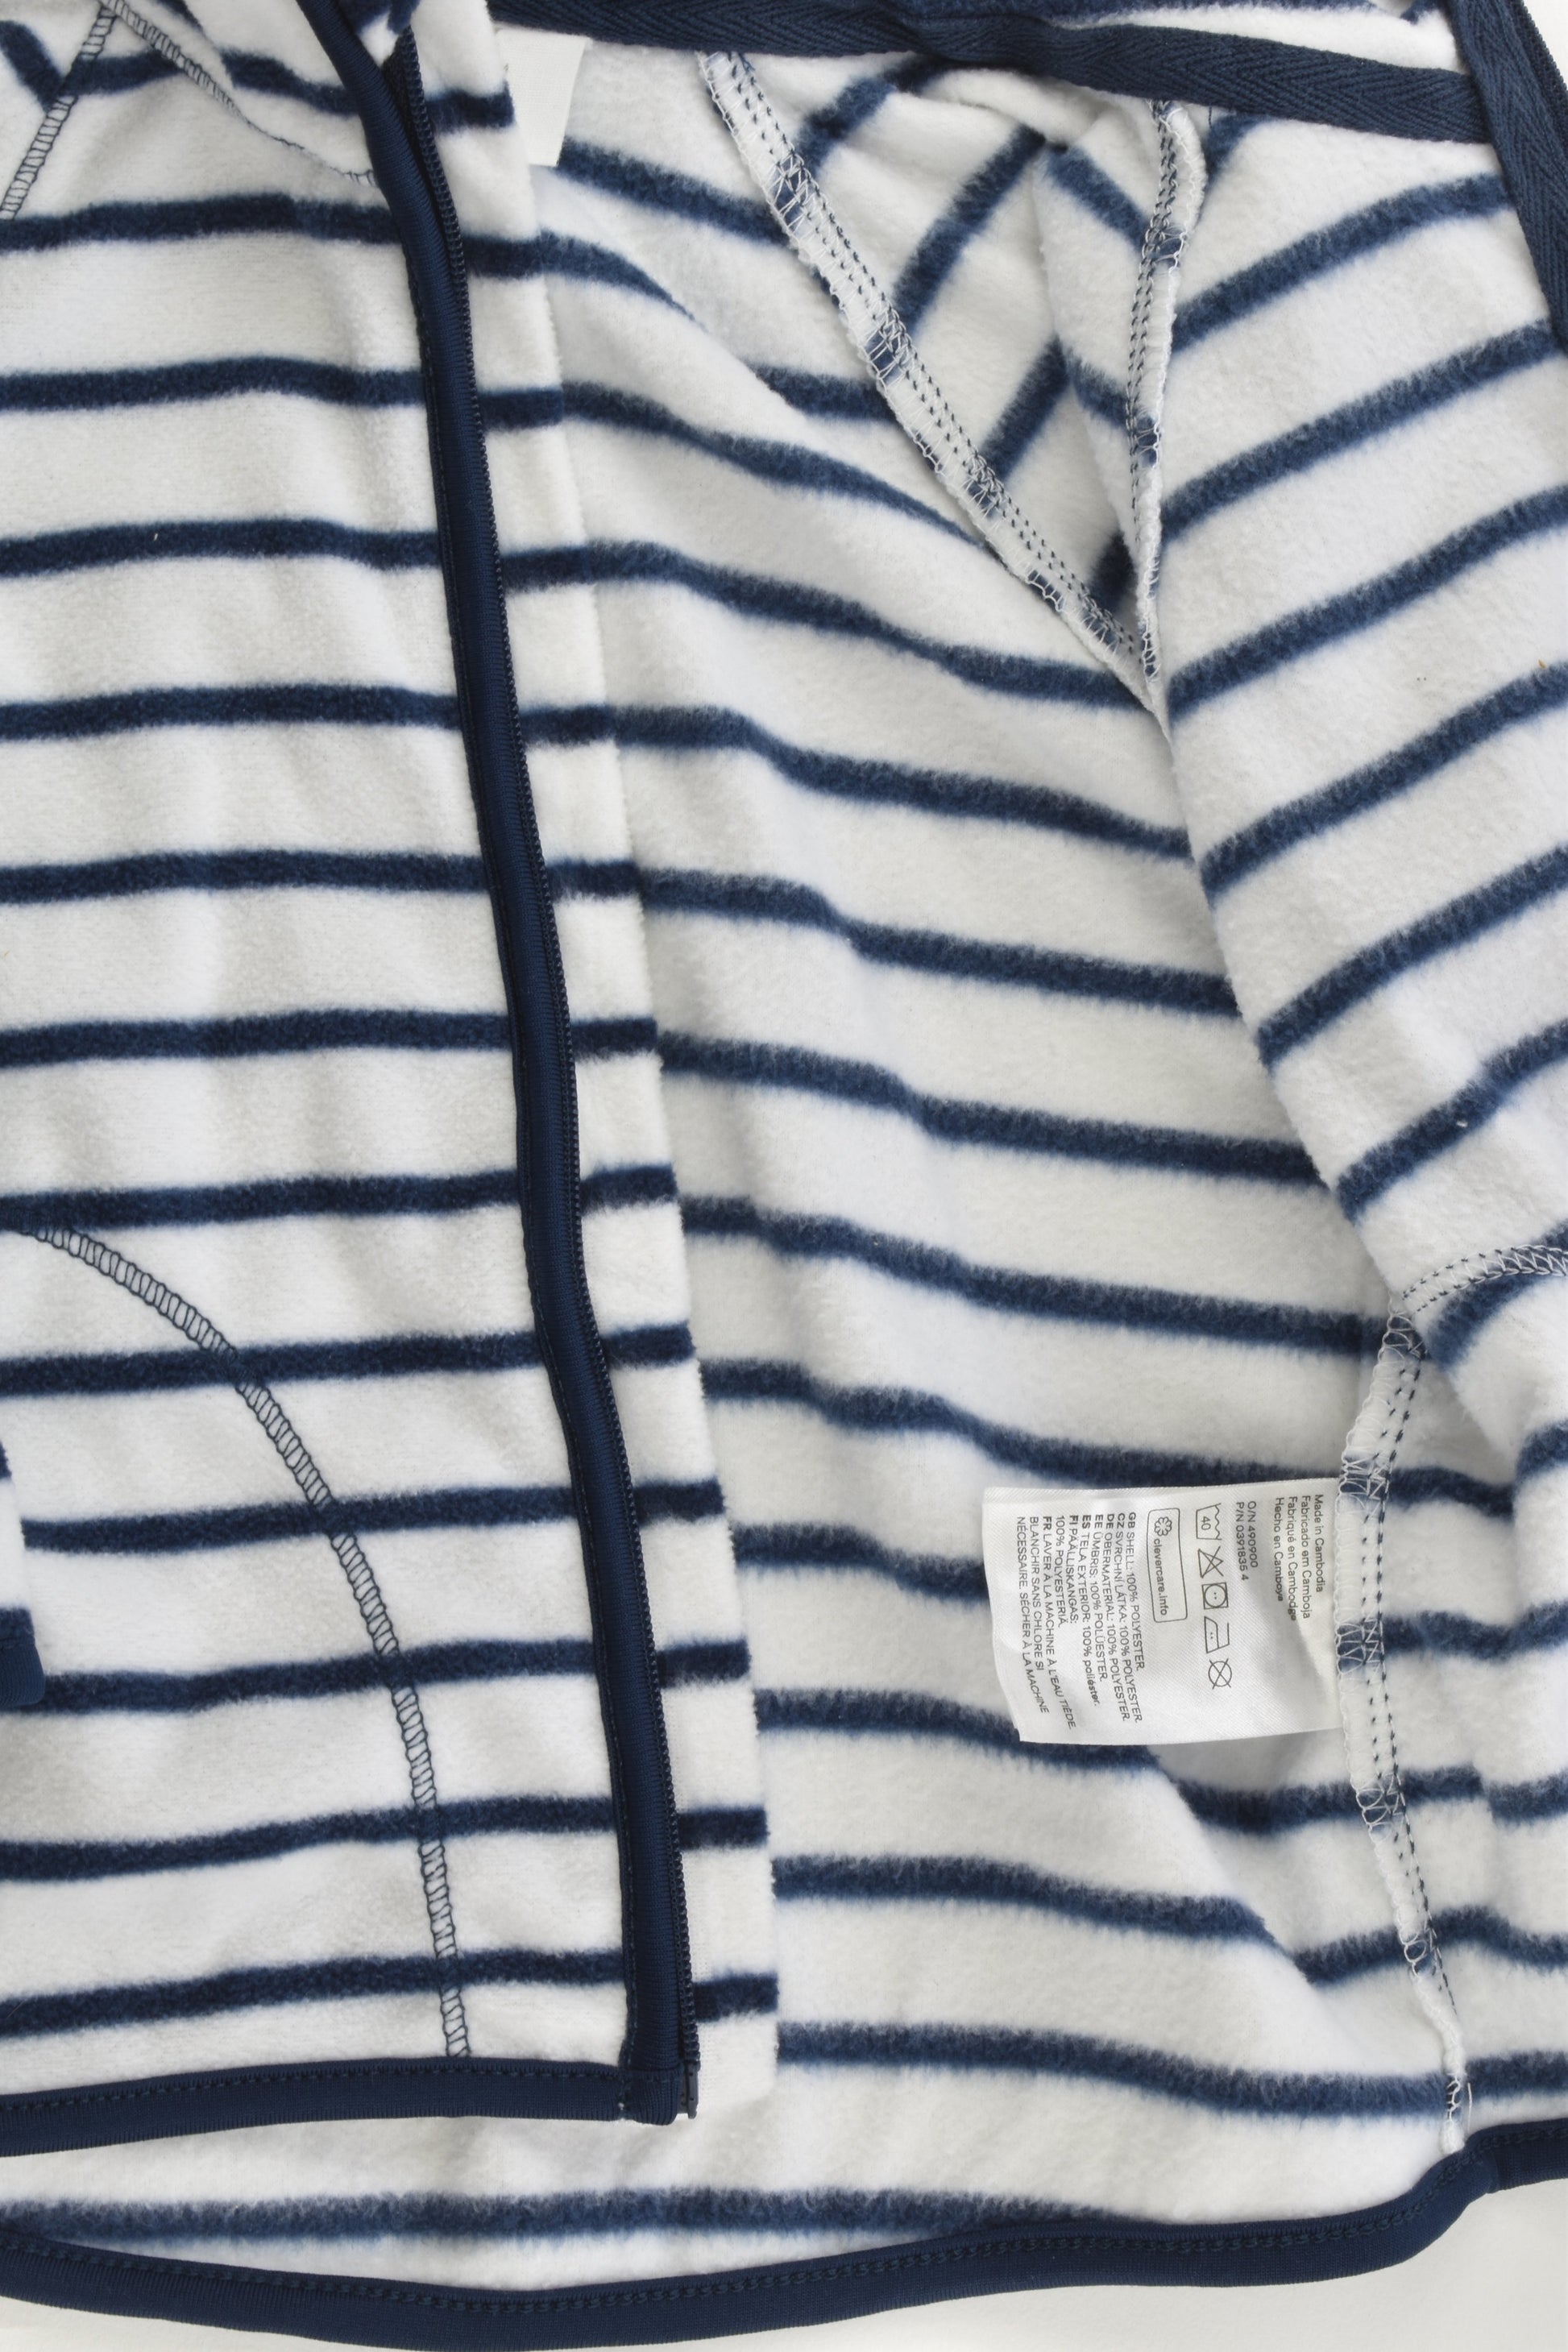 H&M Size 00 (4-6 months, 68 cm) Striped Fleece Jumper